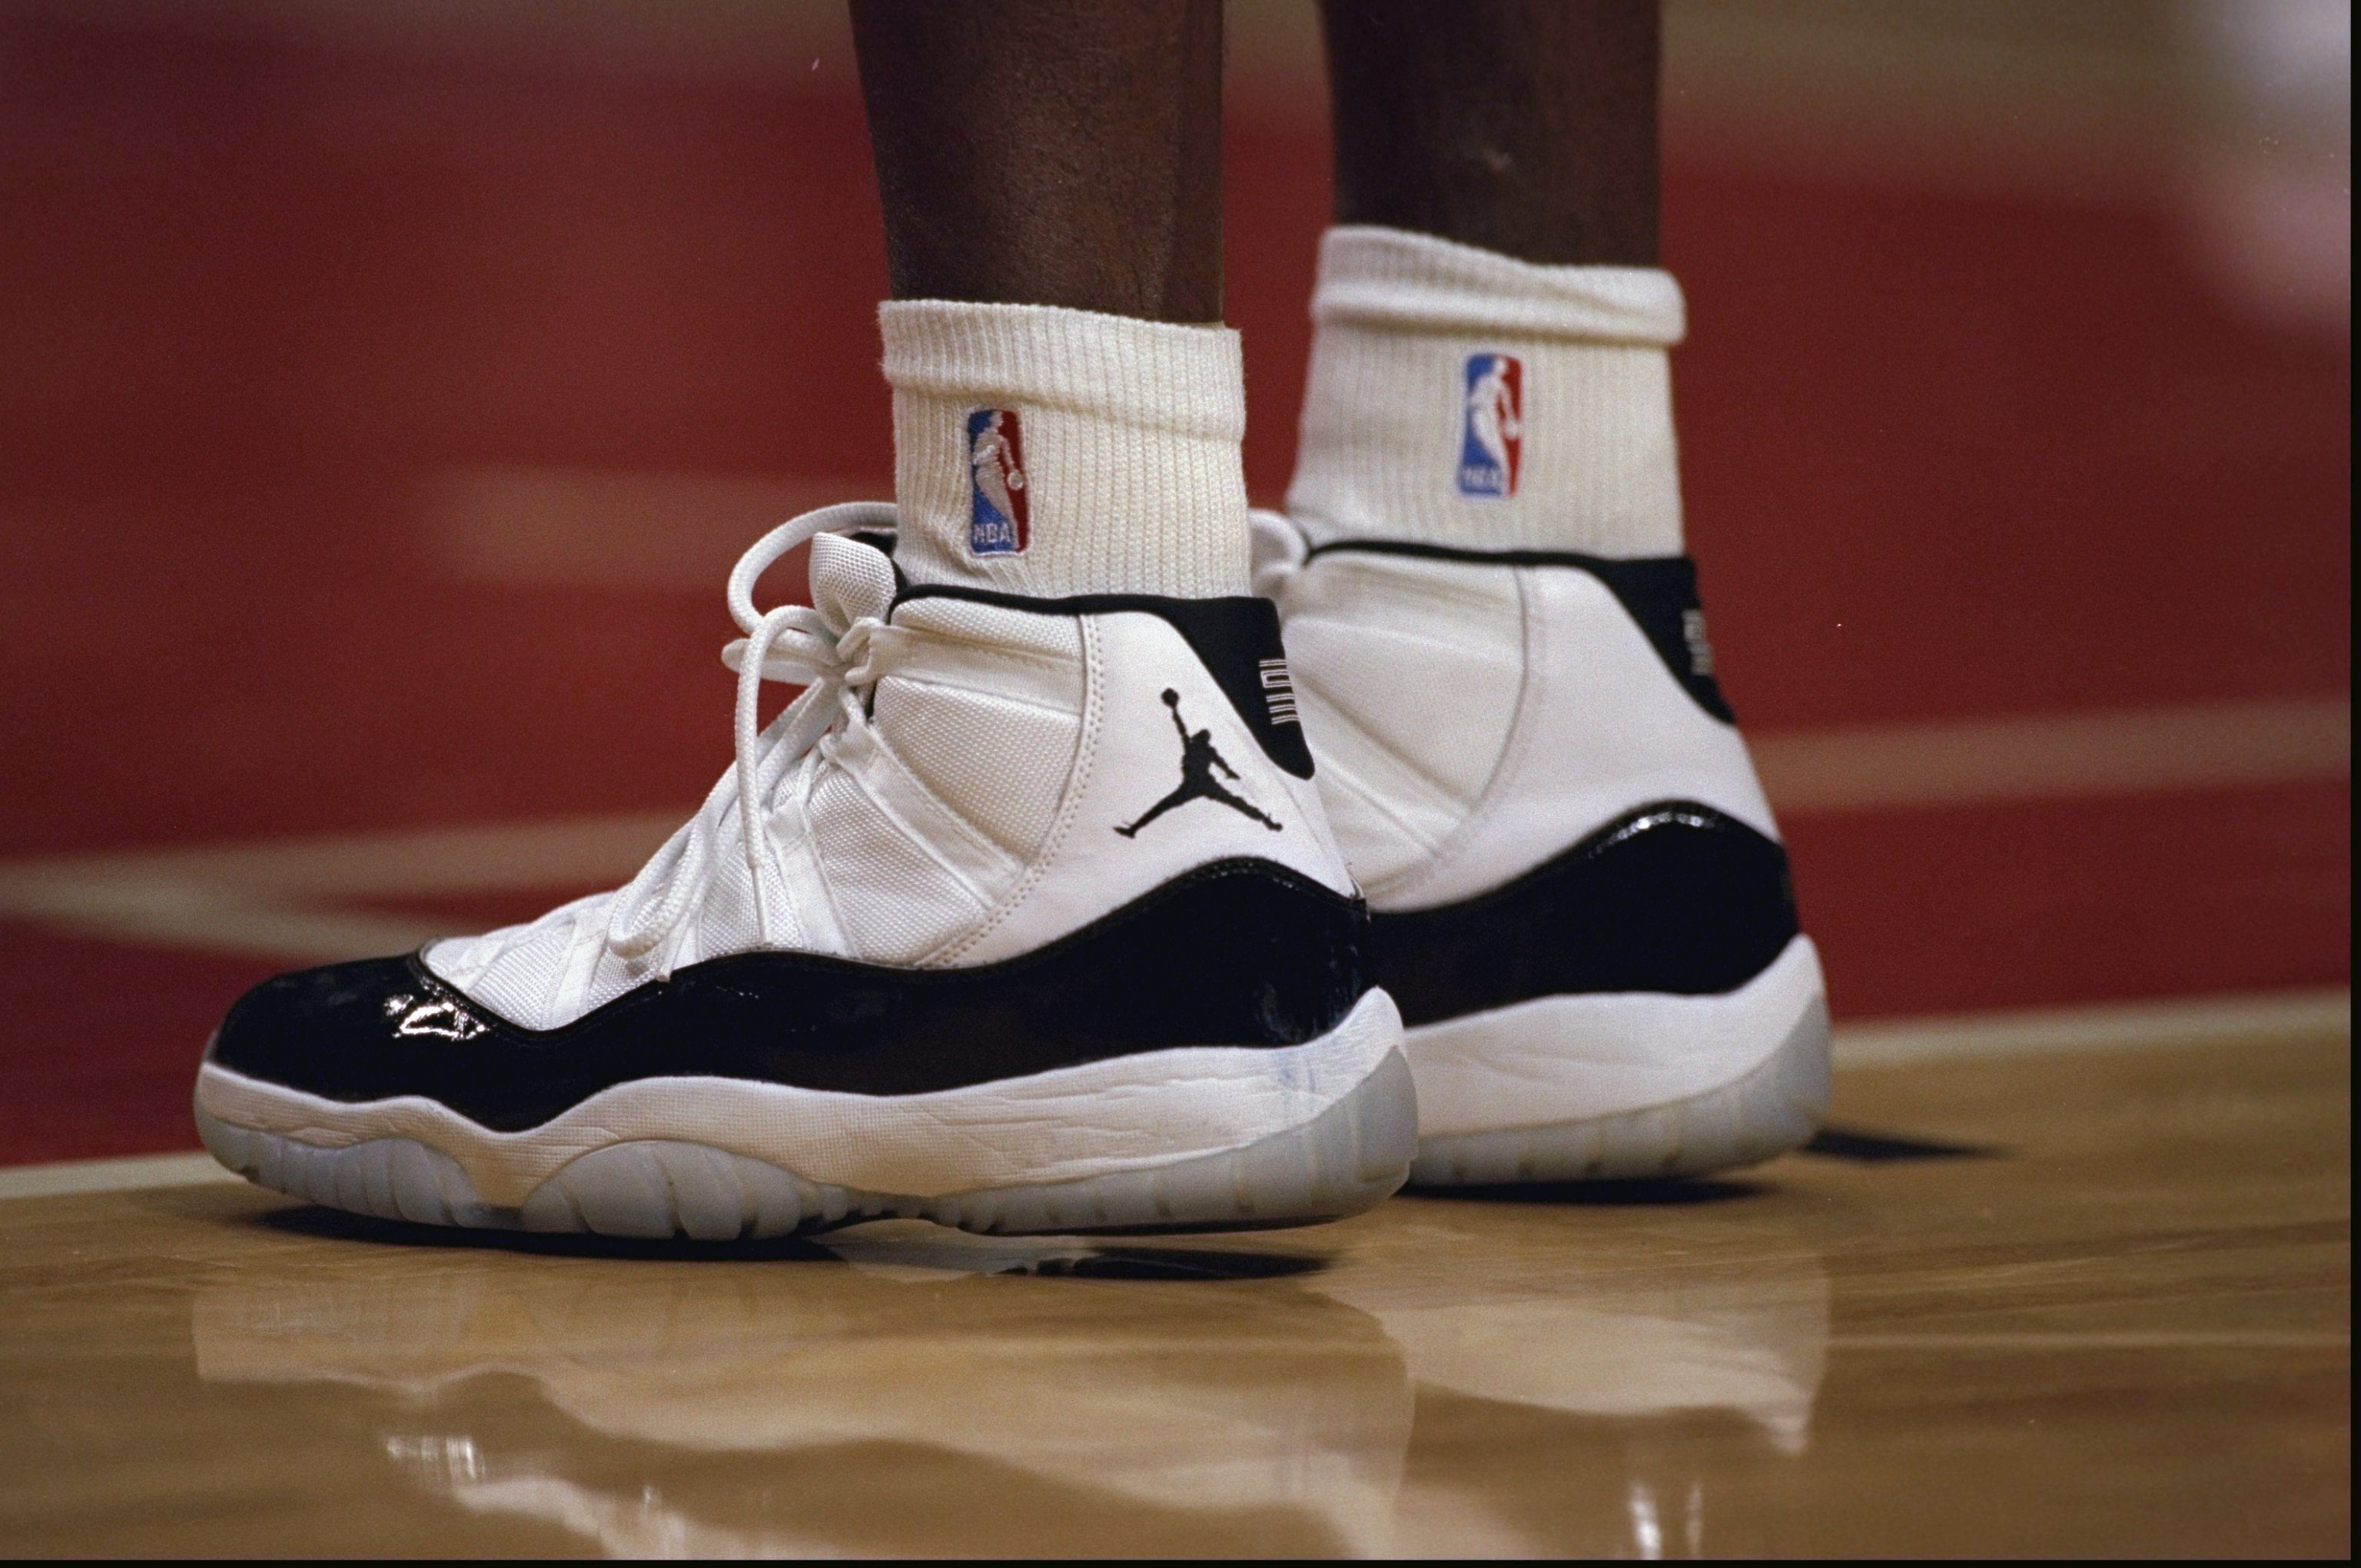 1995 Air Jordan shoes